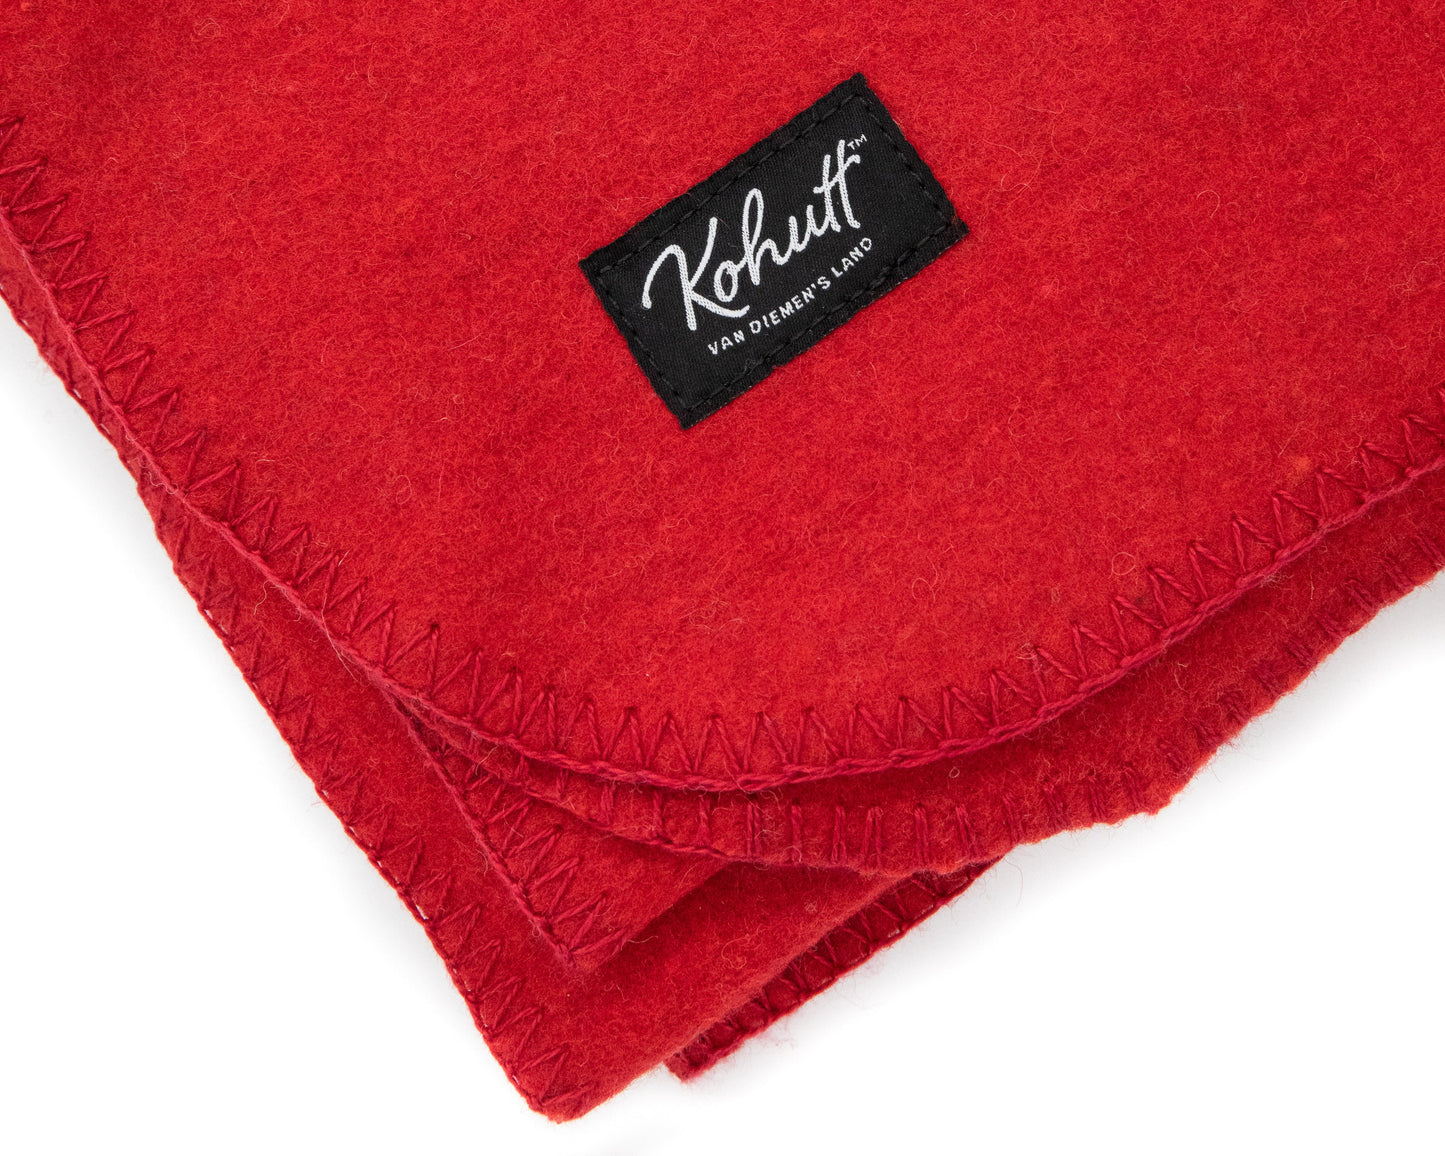 Australian made wool army blanket in crimson red - Kohutt™ - made in Tasmania